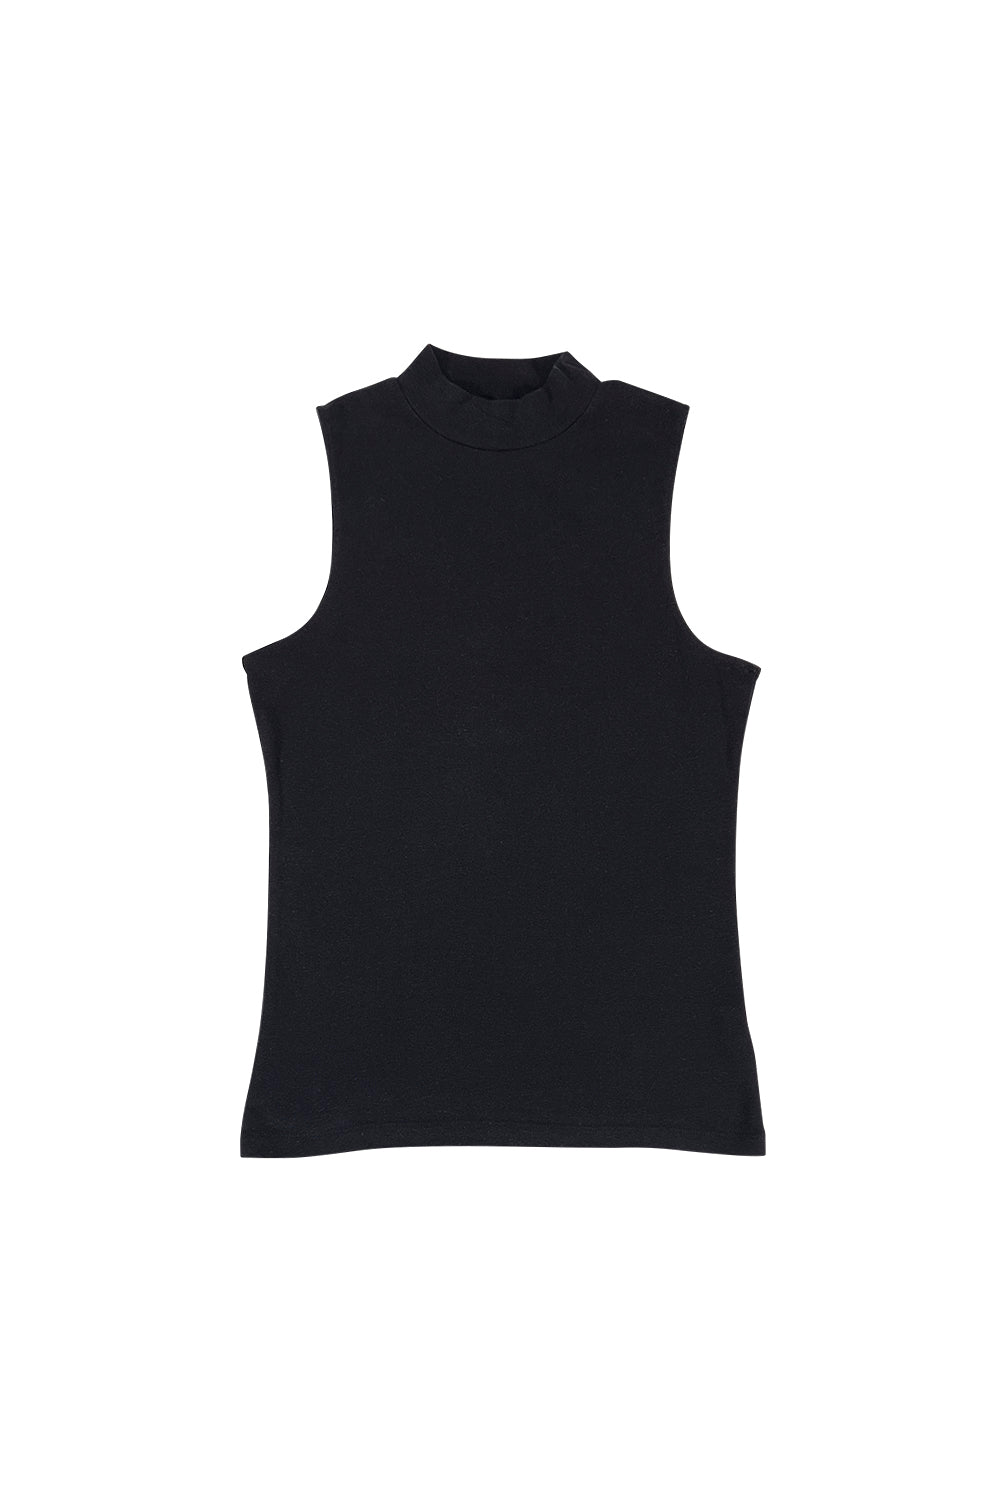 Mariposa Mock Neck Tank | Jungmaven Hemp Clothing & Accessories / Color: Black